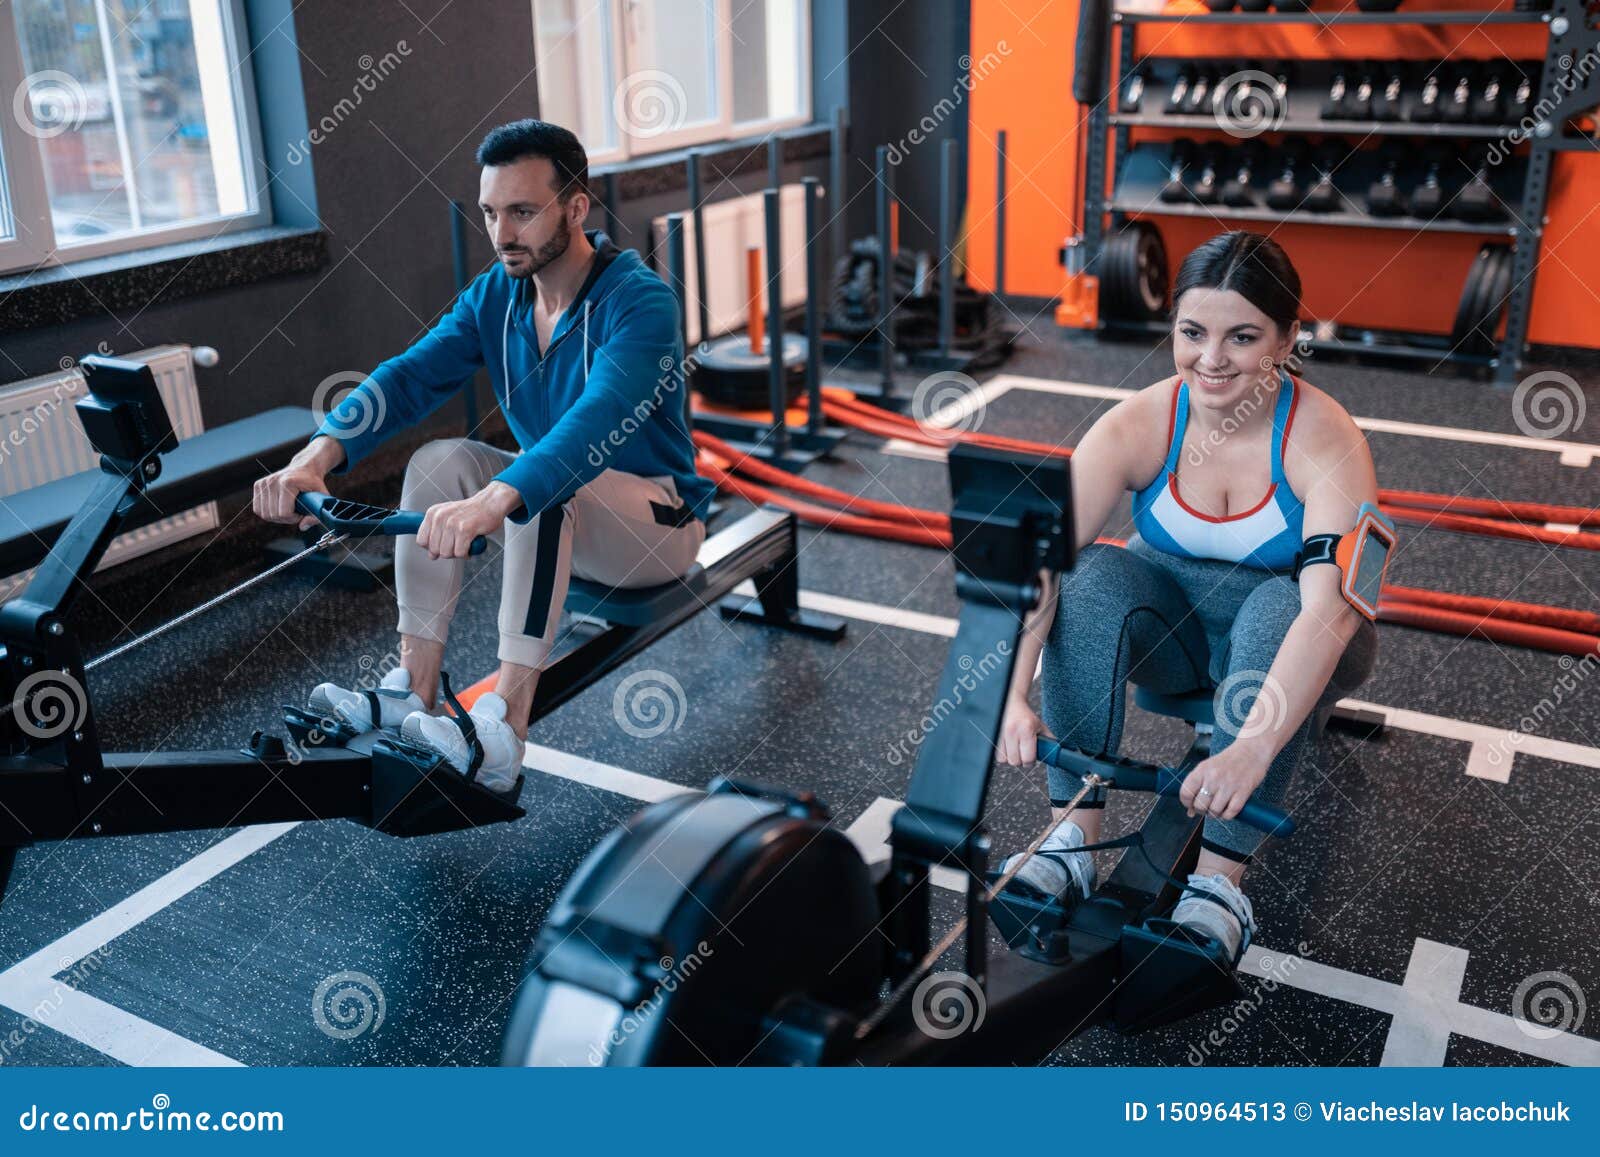 Trainer Teaching Overweight Woman Using Fitness Equipment Stock Image ...